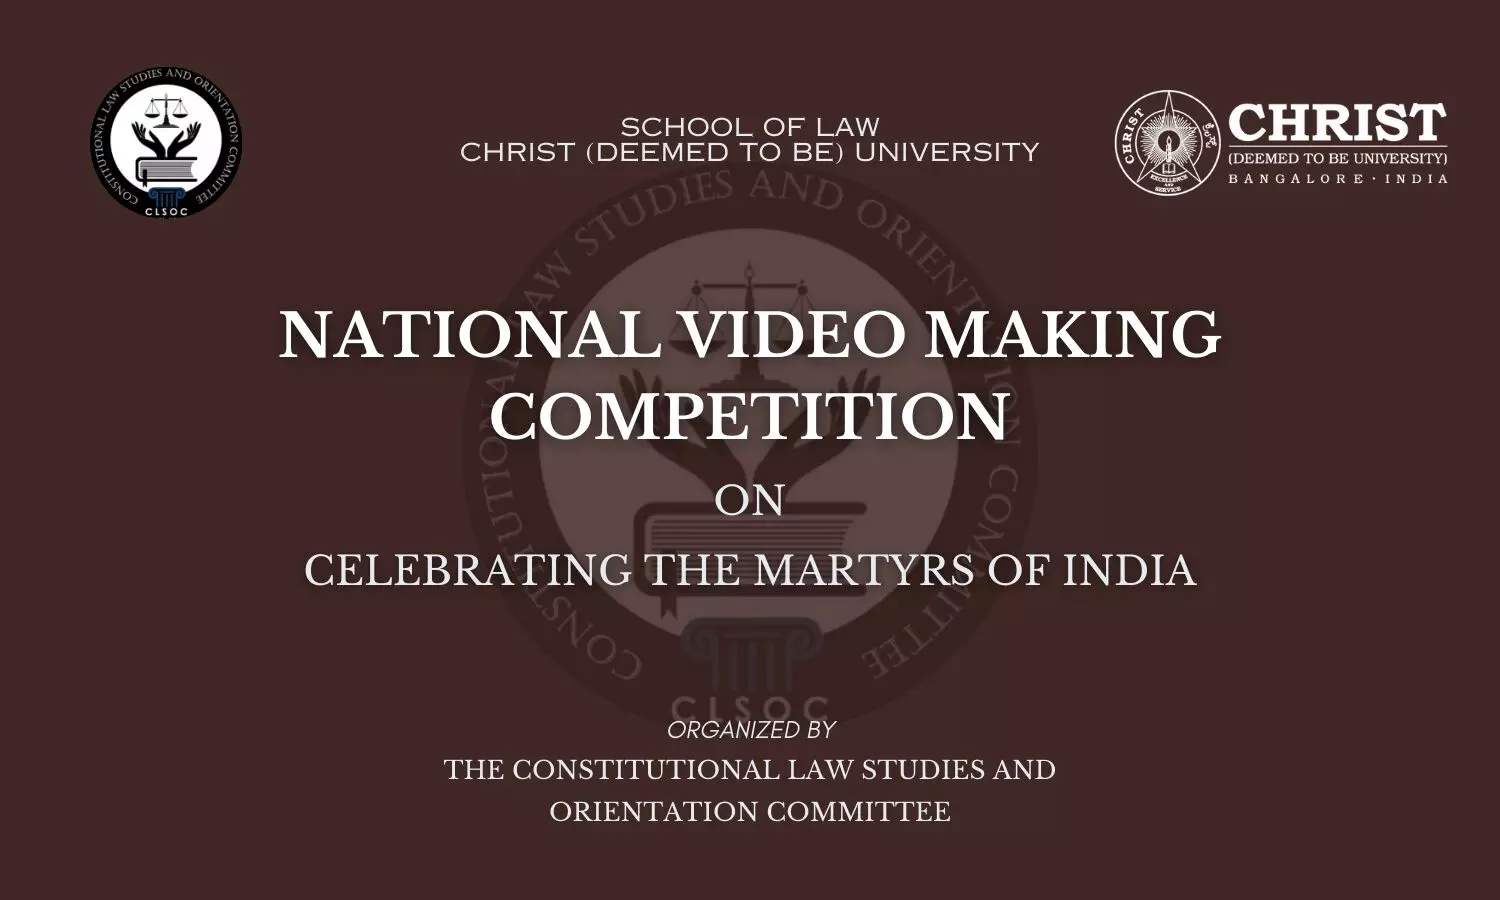 National Video Making Competition on Celebrating the Martyrs of India | CHRIST University, Bangalore